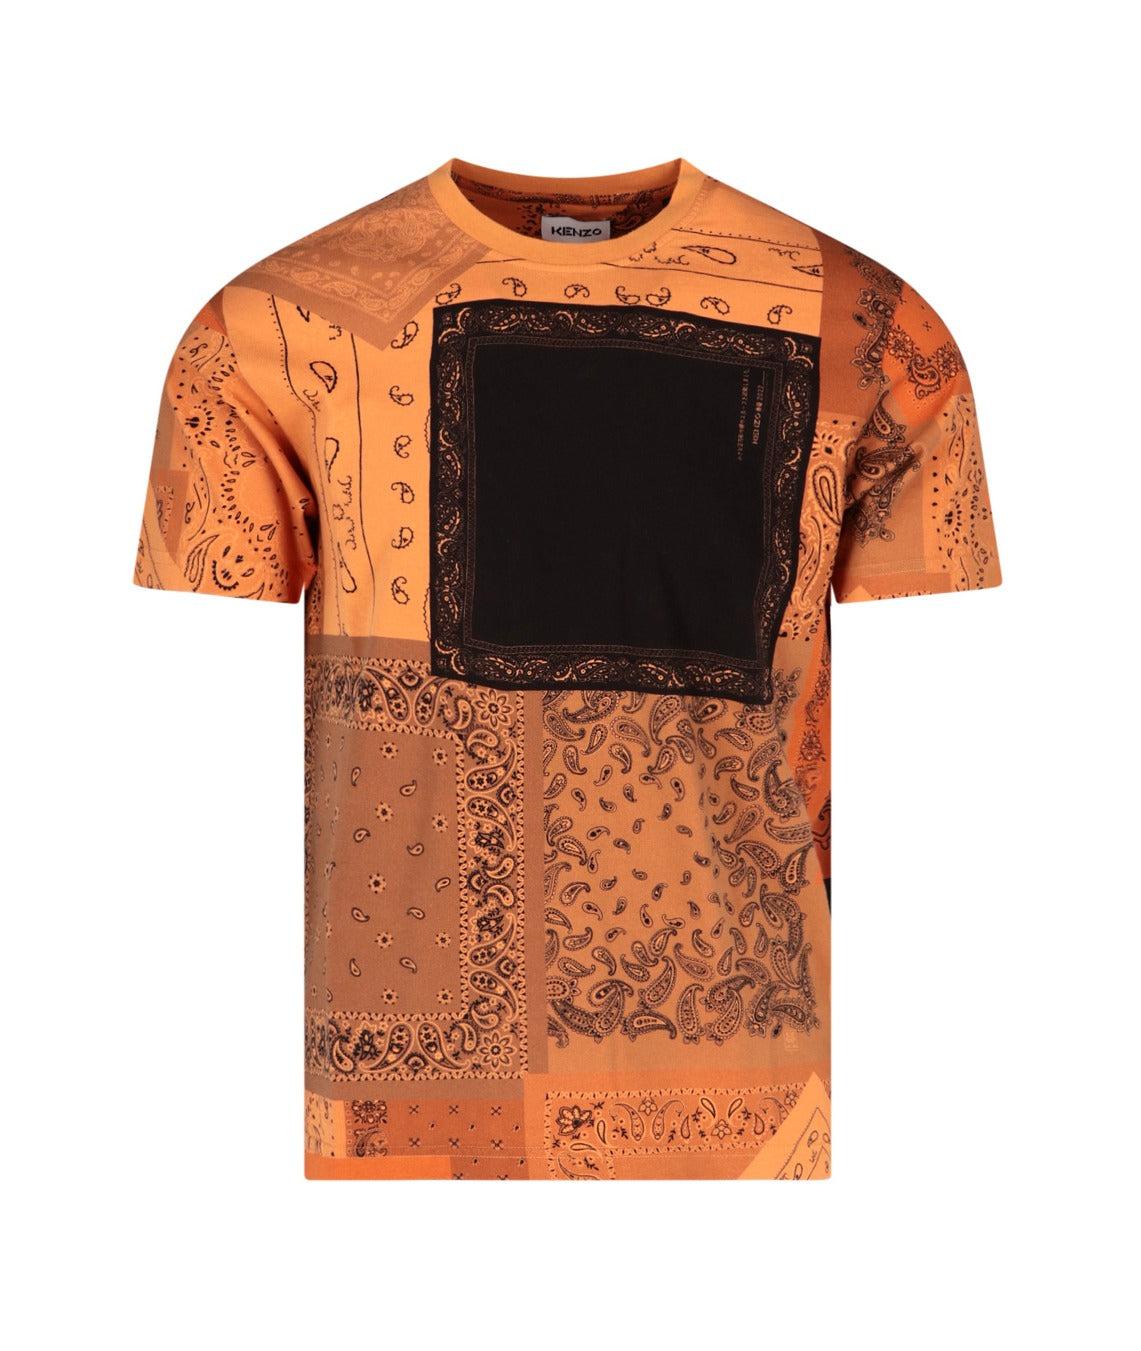 KENZO Cotton Bandana Printed Crewneck T-shirt in Orange for Men - Lyst